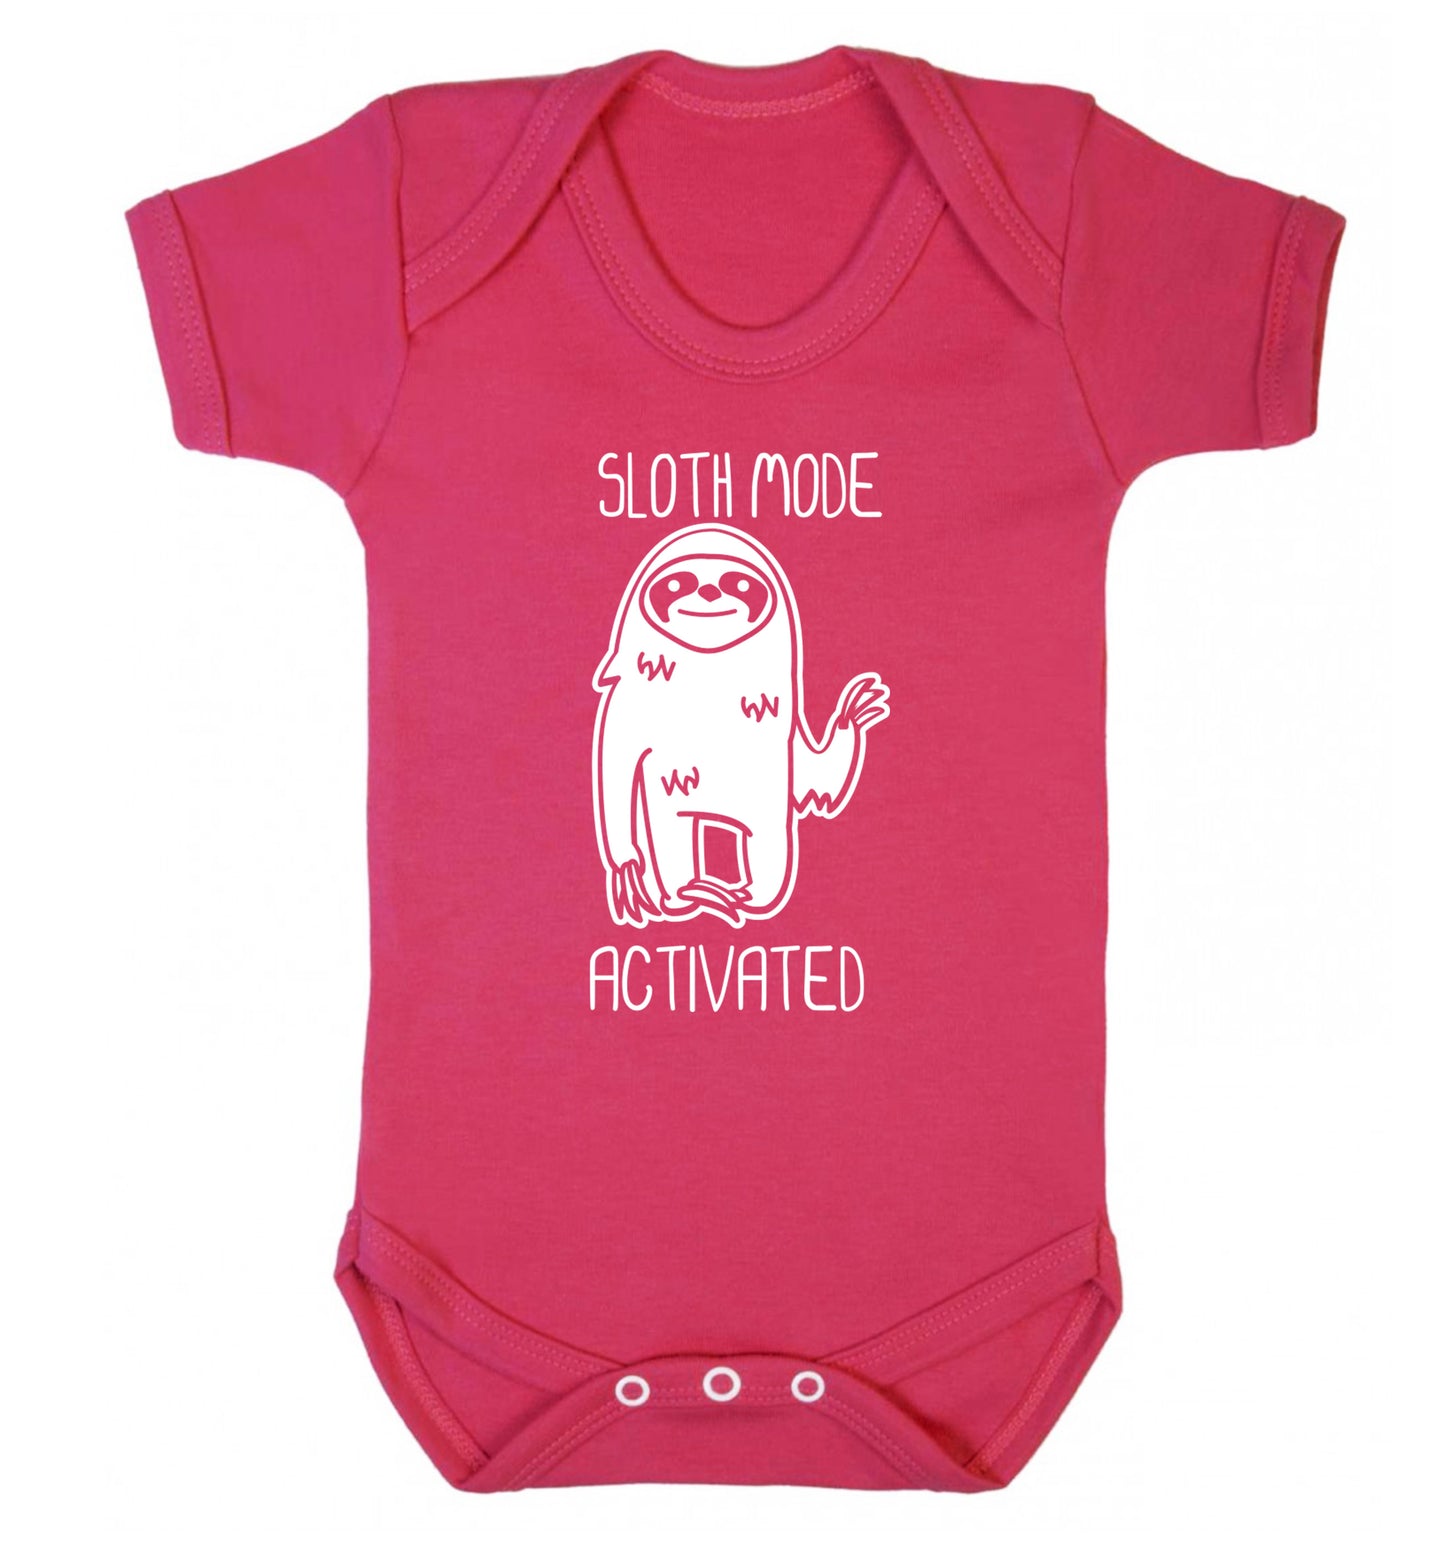 Sloth mode acitvated Baby Vest dark pink 18-24 months